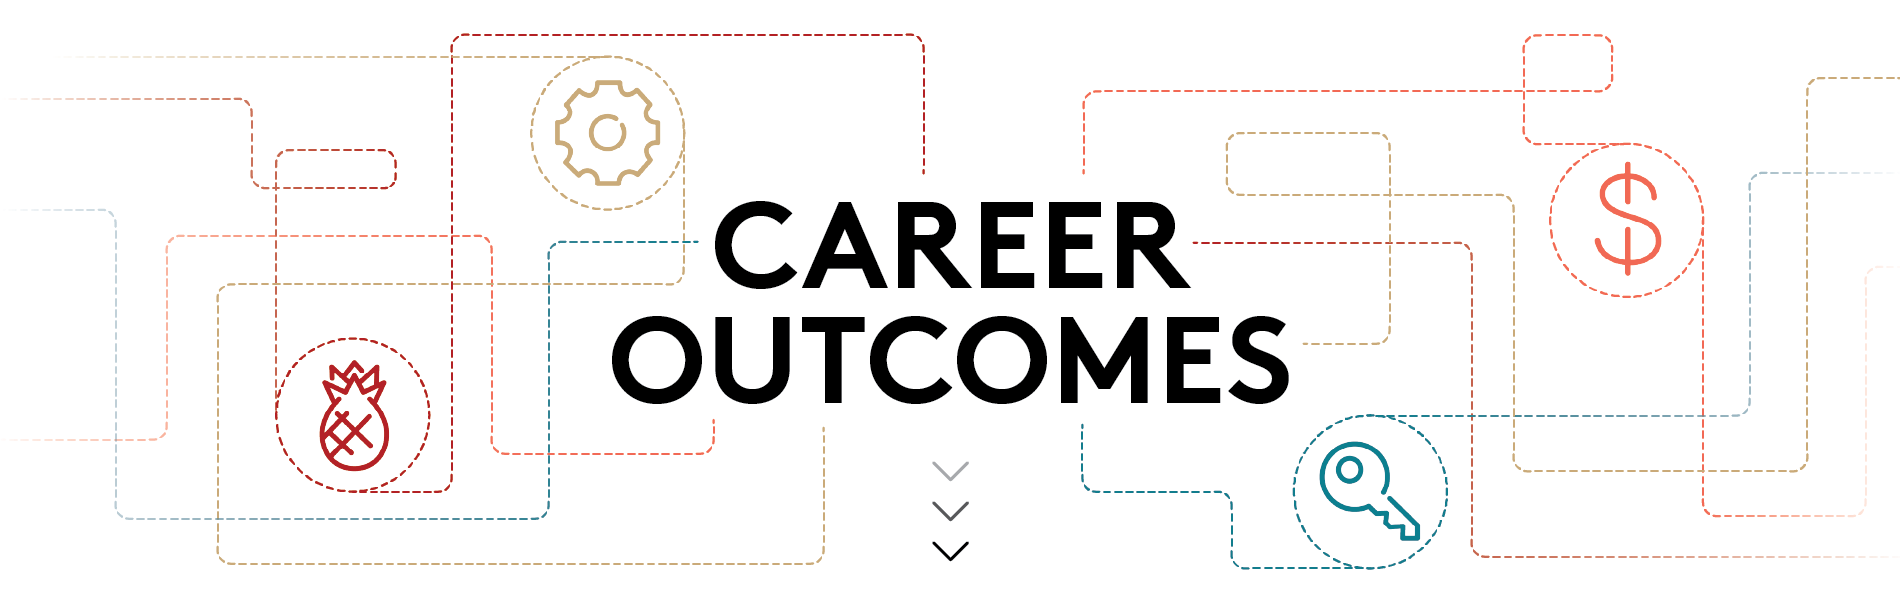 career outcomes 